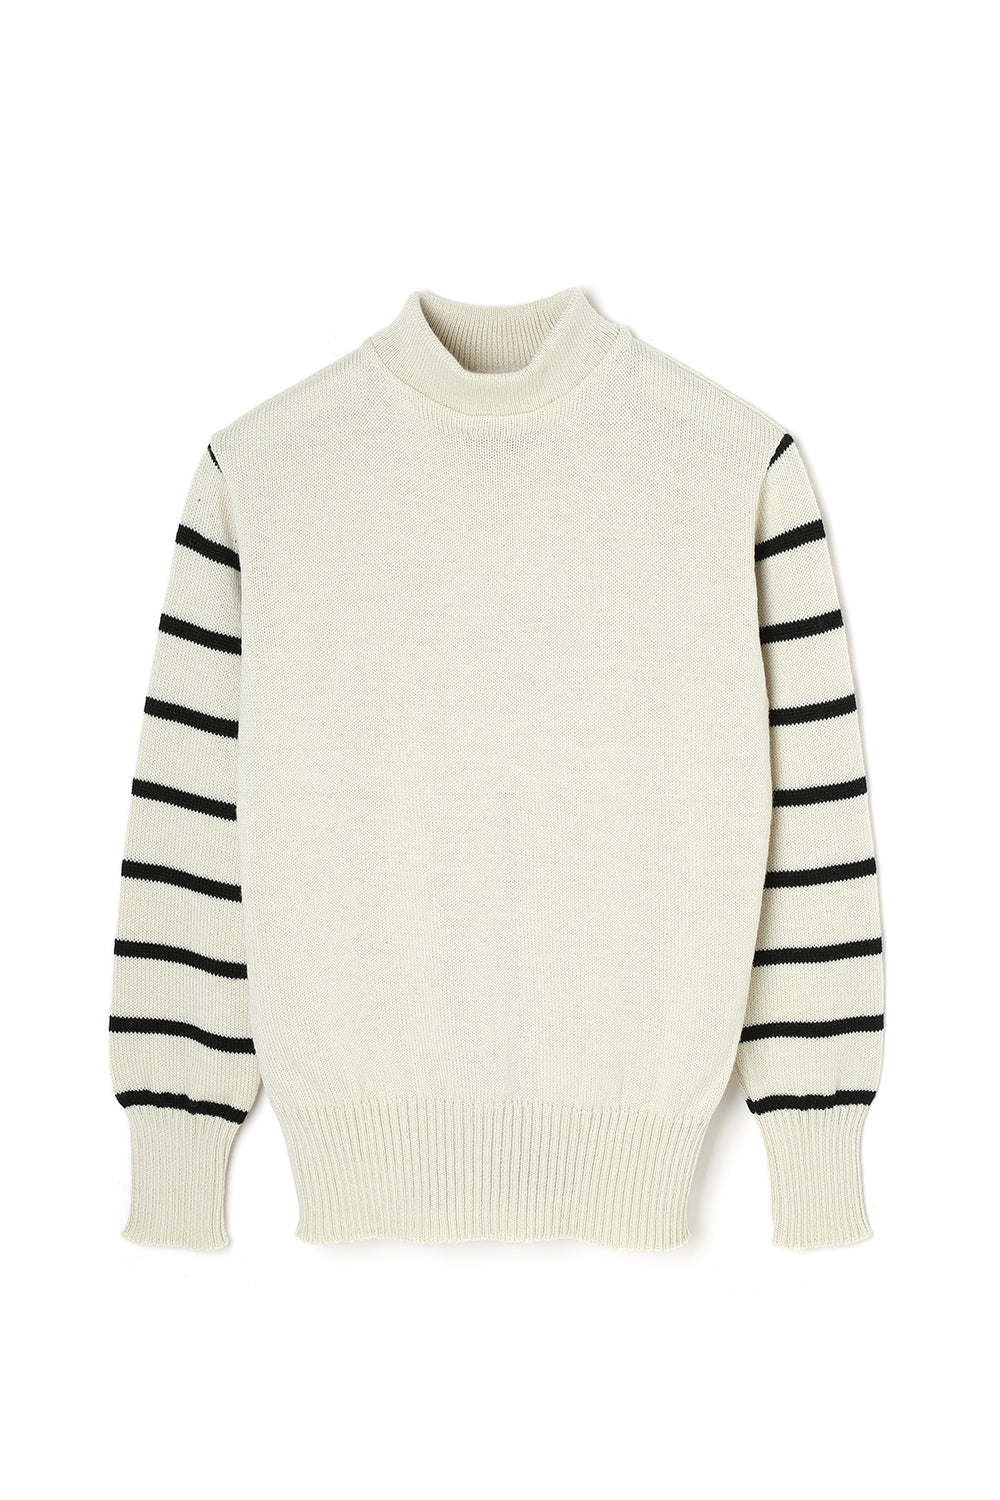 Lot.724 High Neck Sweater -White/Black-